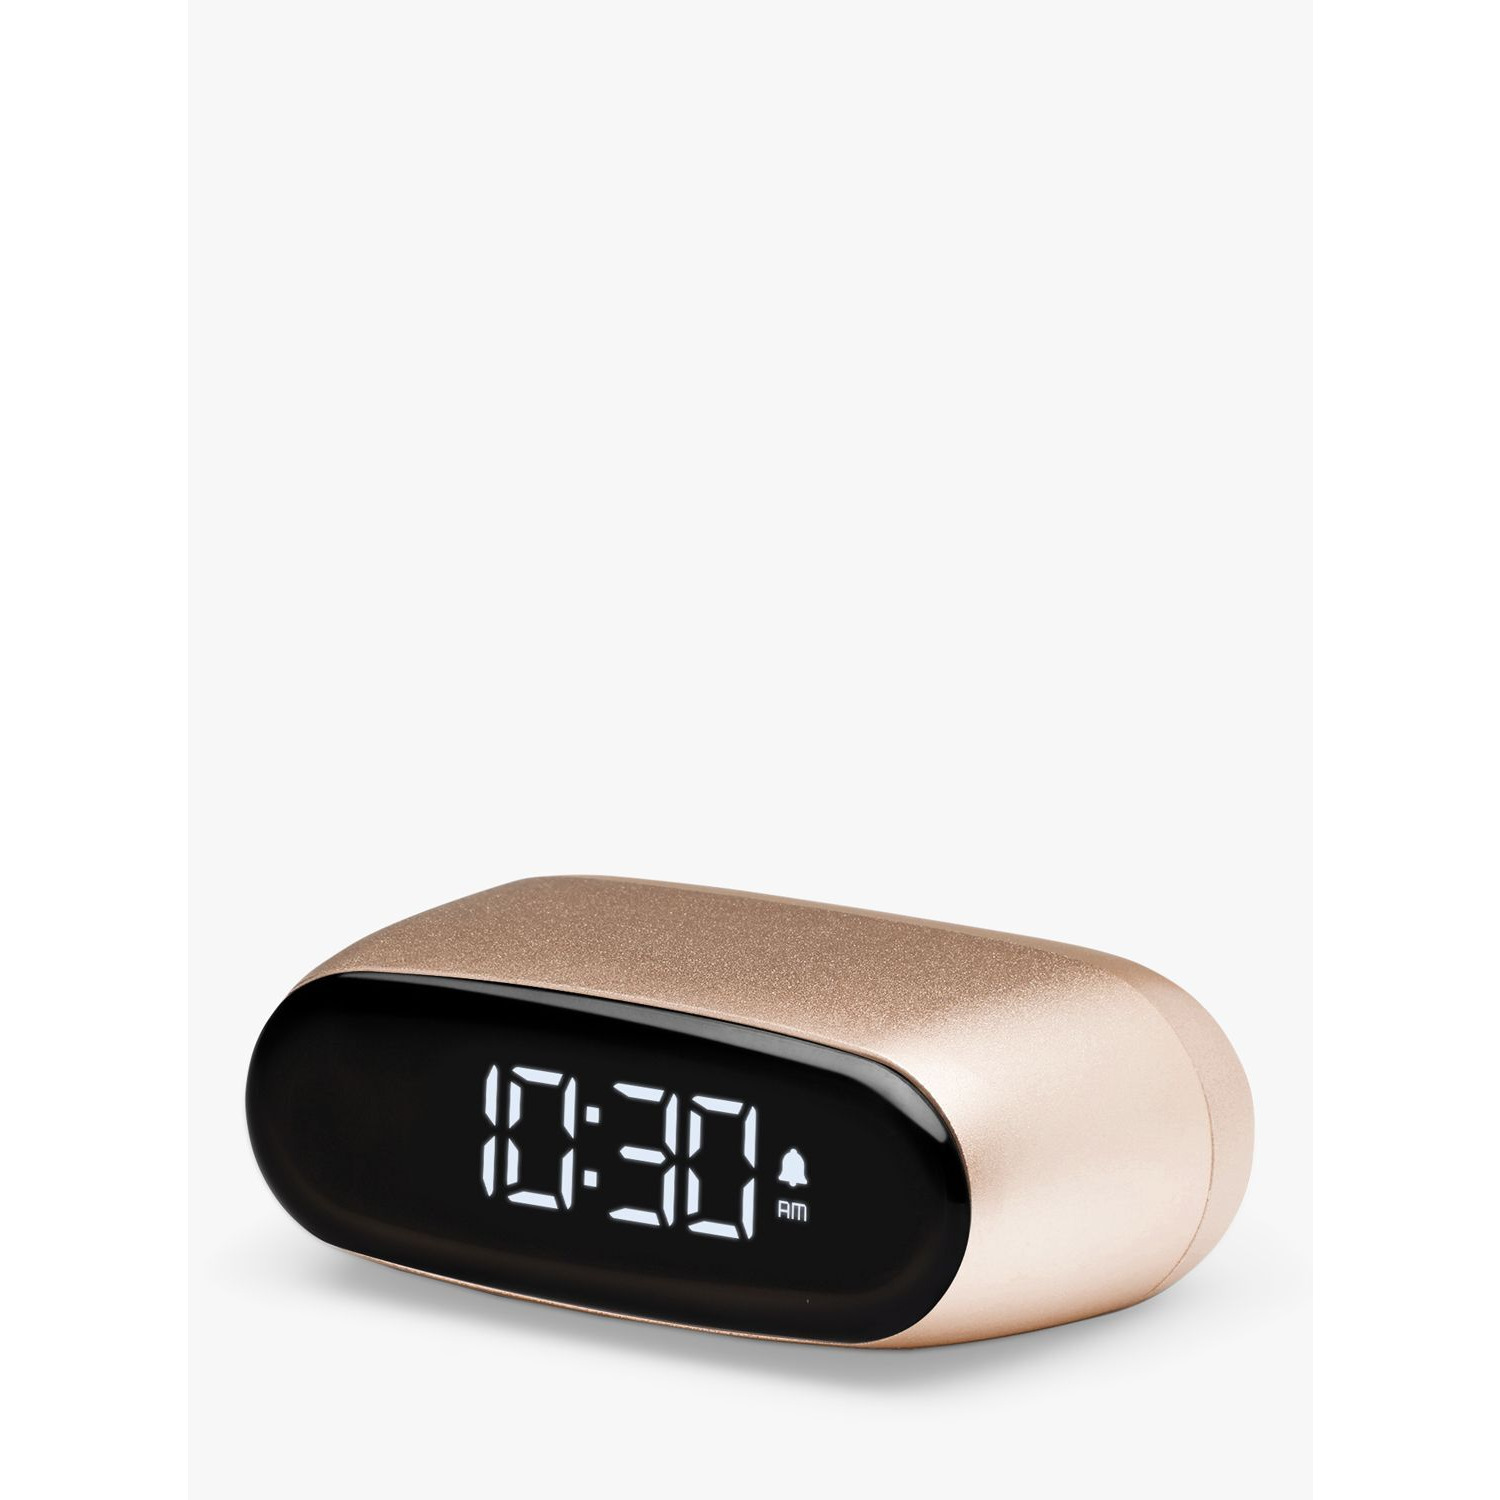 Lexon Minut LCD Digital Alarm Clock - image 1